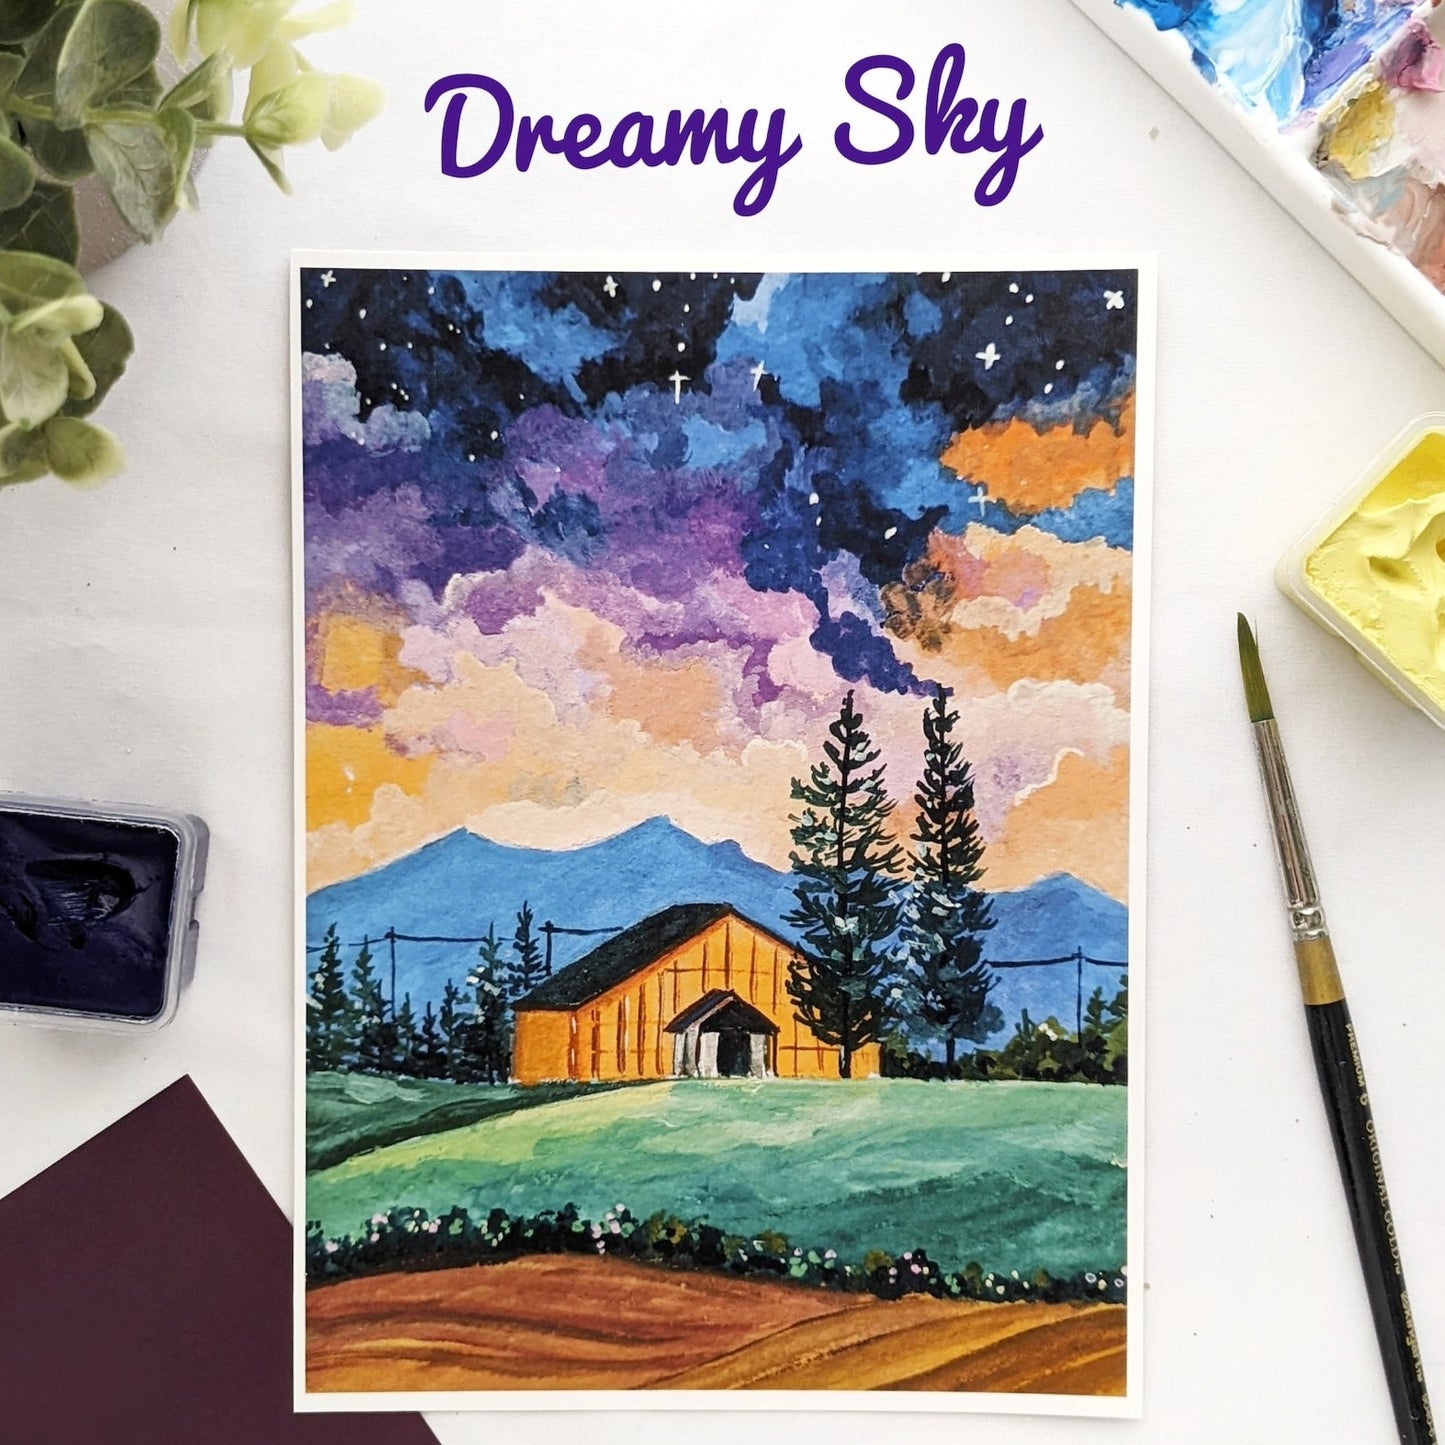 Dreamy sky- Aesthetic sky series